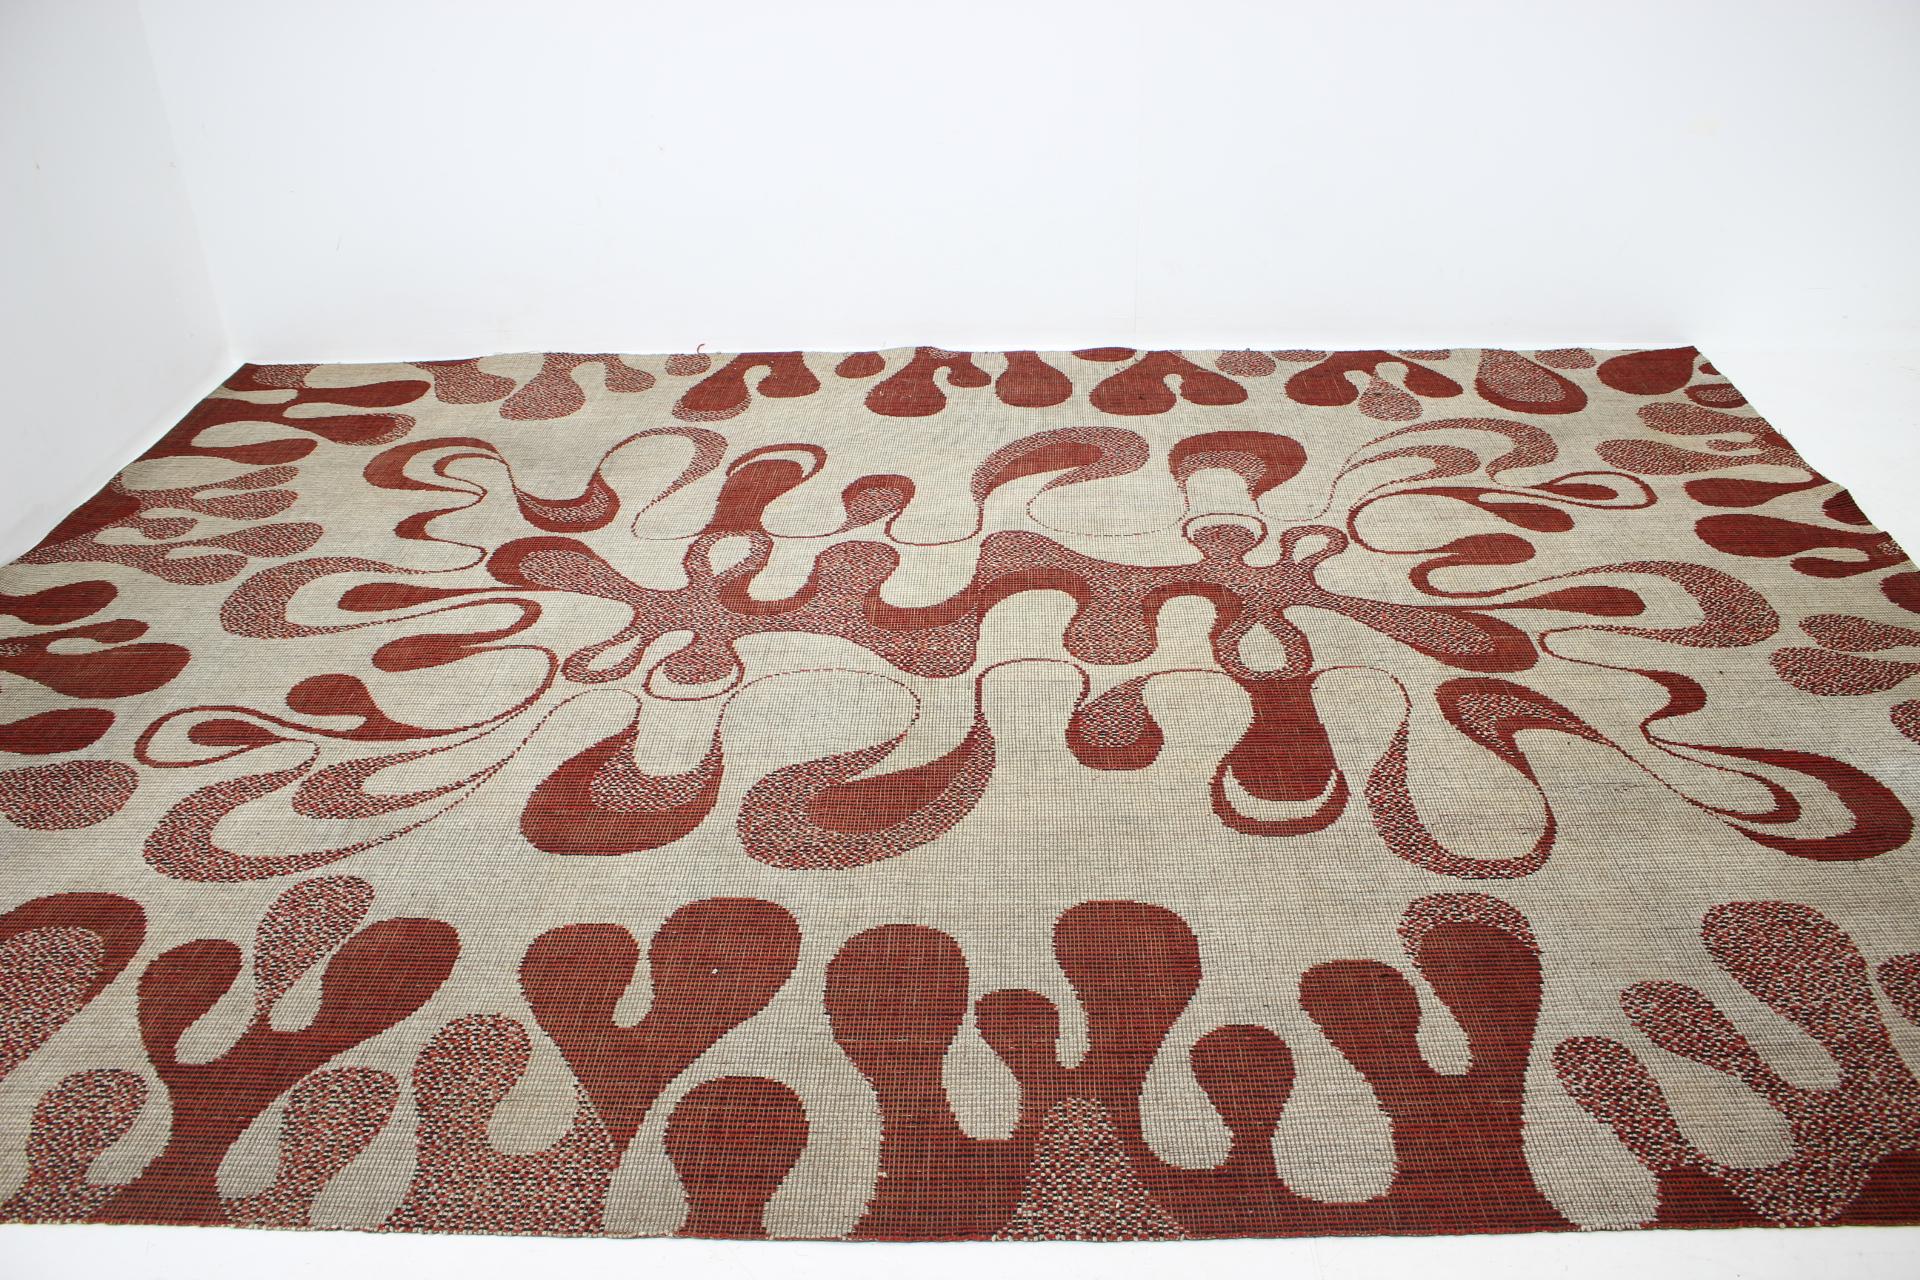 Czech Abstract Organic Modernist Design Carpet / Rug, 1960s For Sale